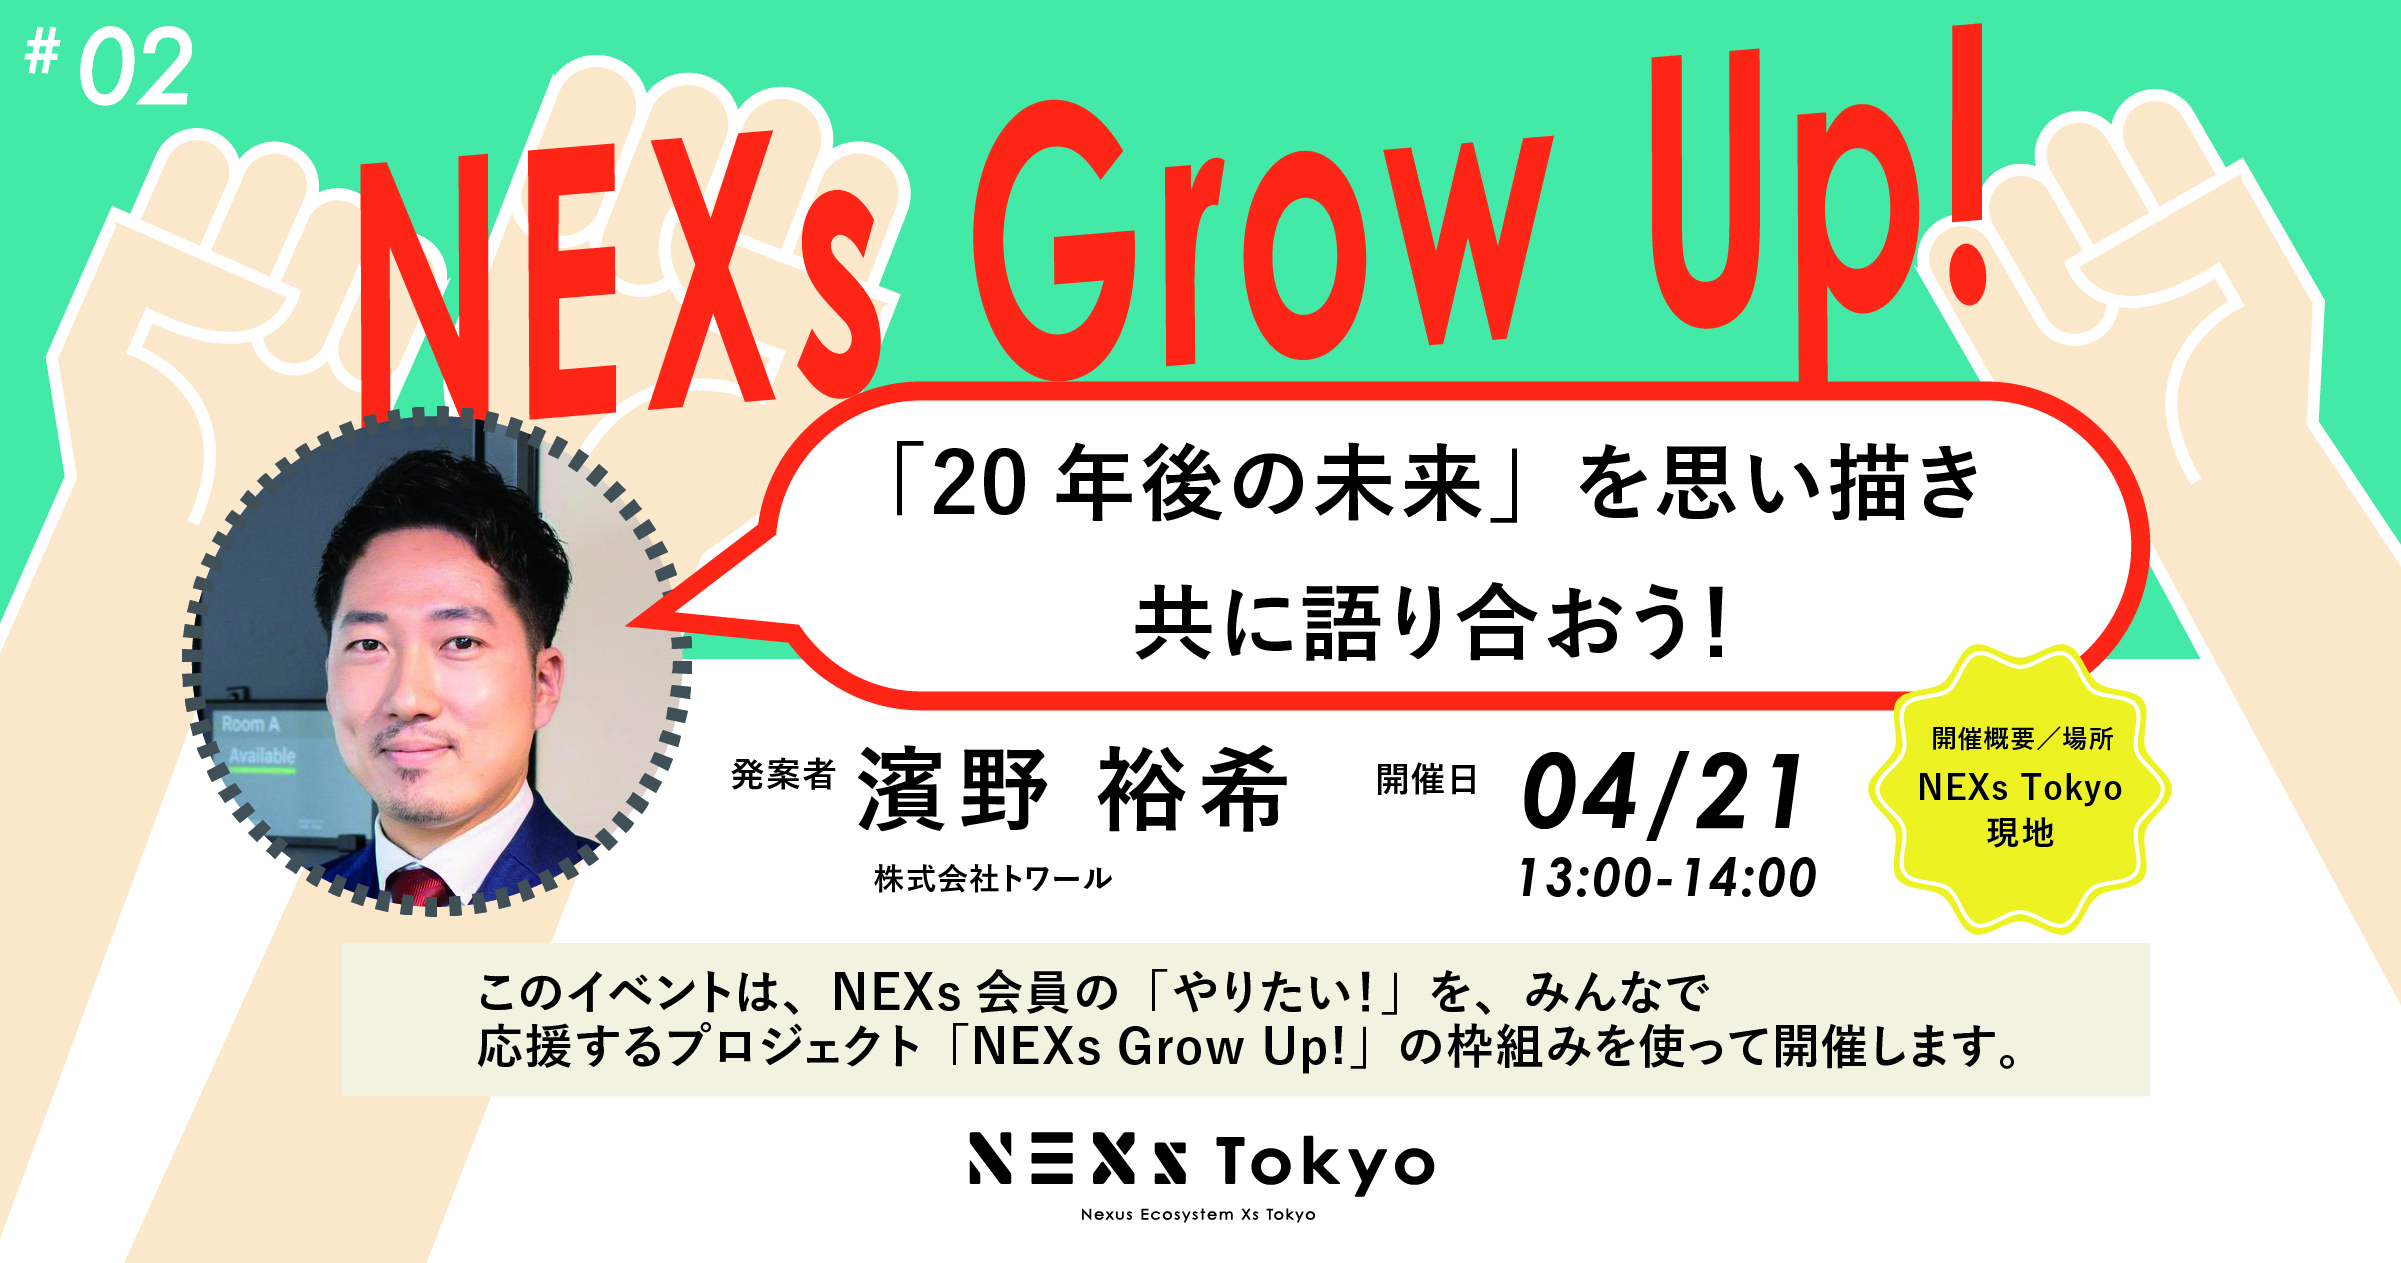 NEXs Grow Up! Vol.2「20年後の未来」を思い描き共に語り合おう！